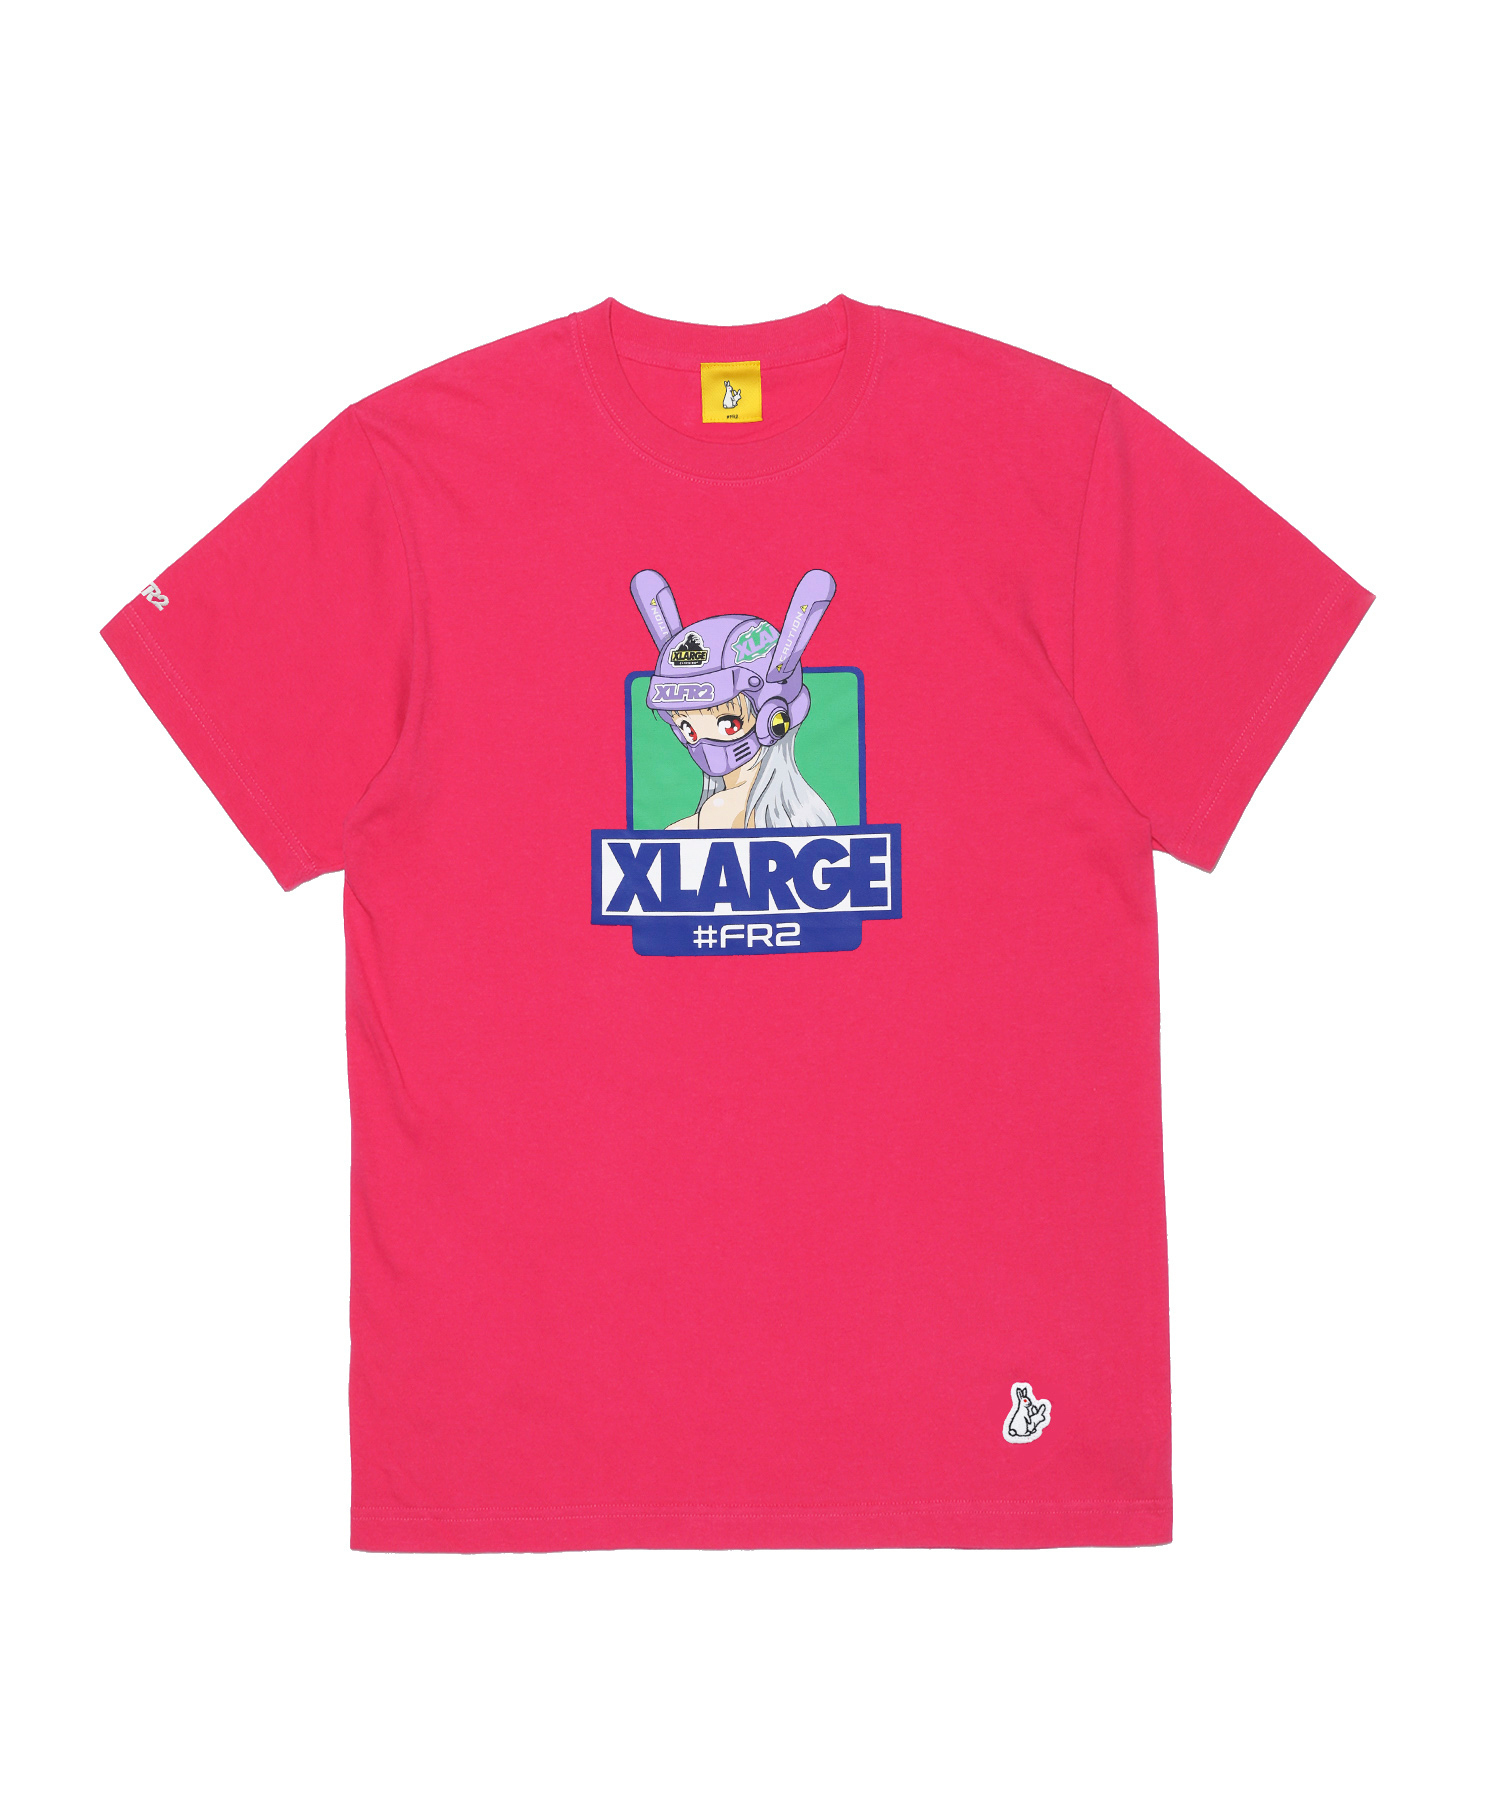 XLARGE x FR2 Biker Girl T-shirt Pink Men's - FW20 - US